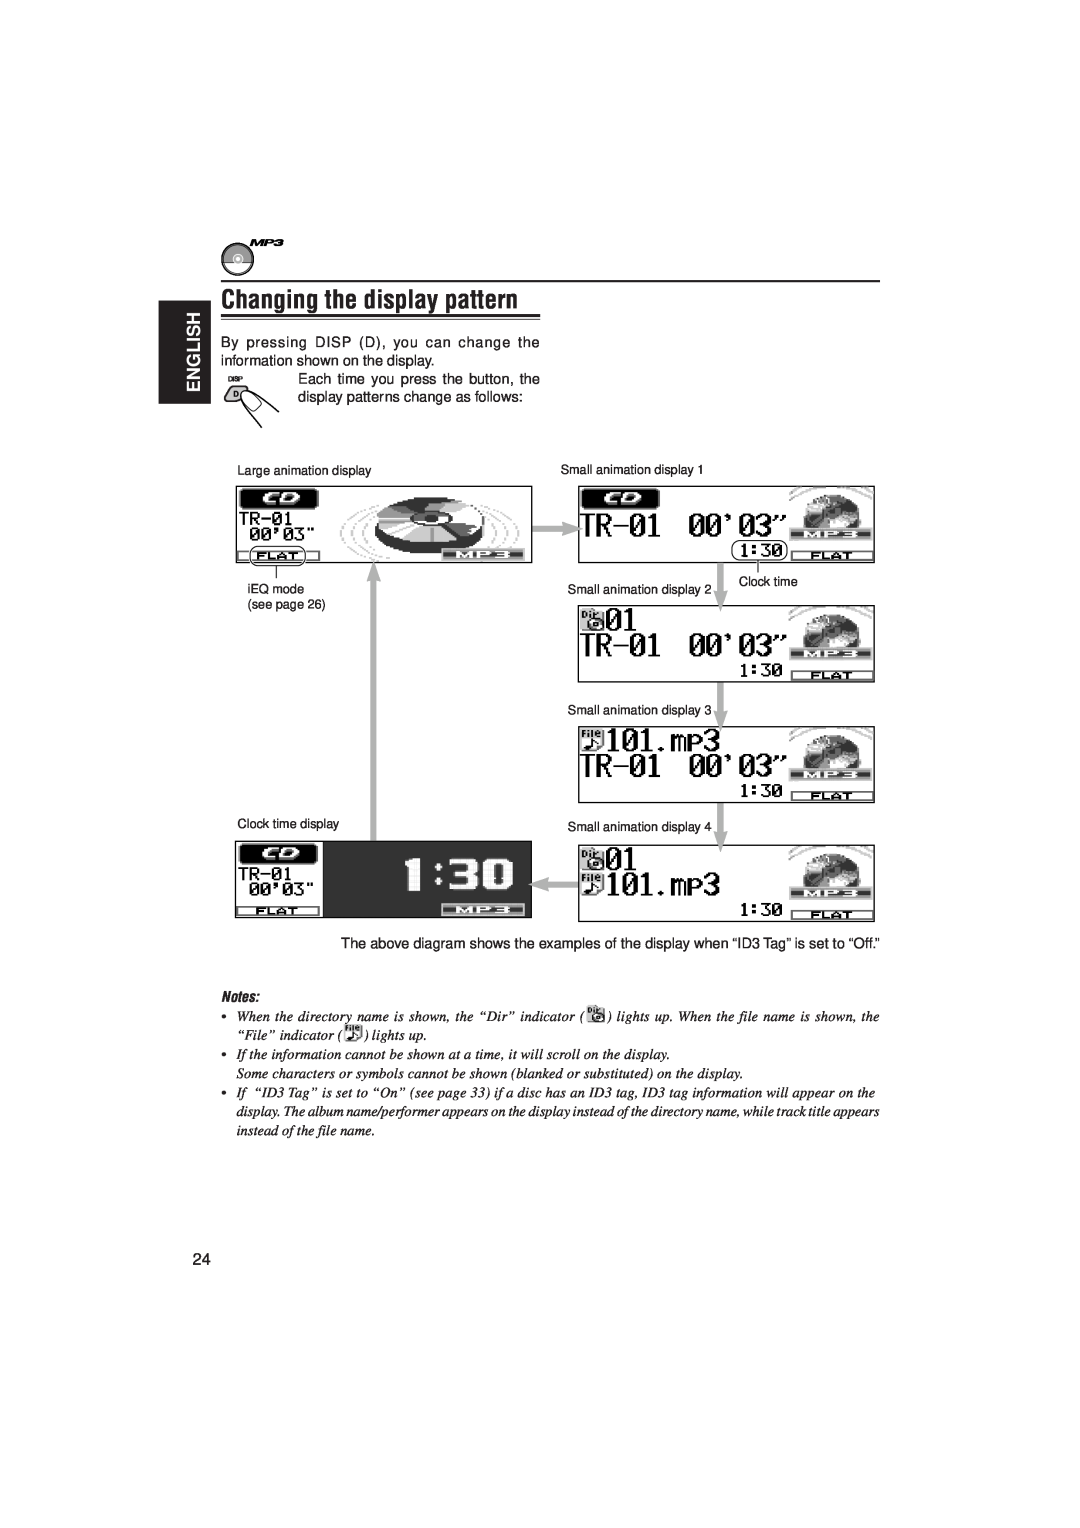 JVC IKD-LH2000 manual Changing the display pattern, English, Notes, “File” indicator lights up 